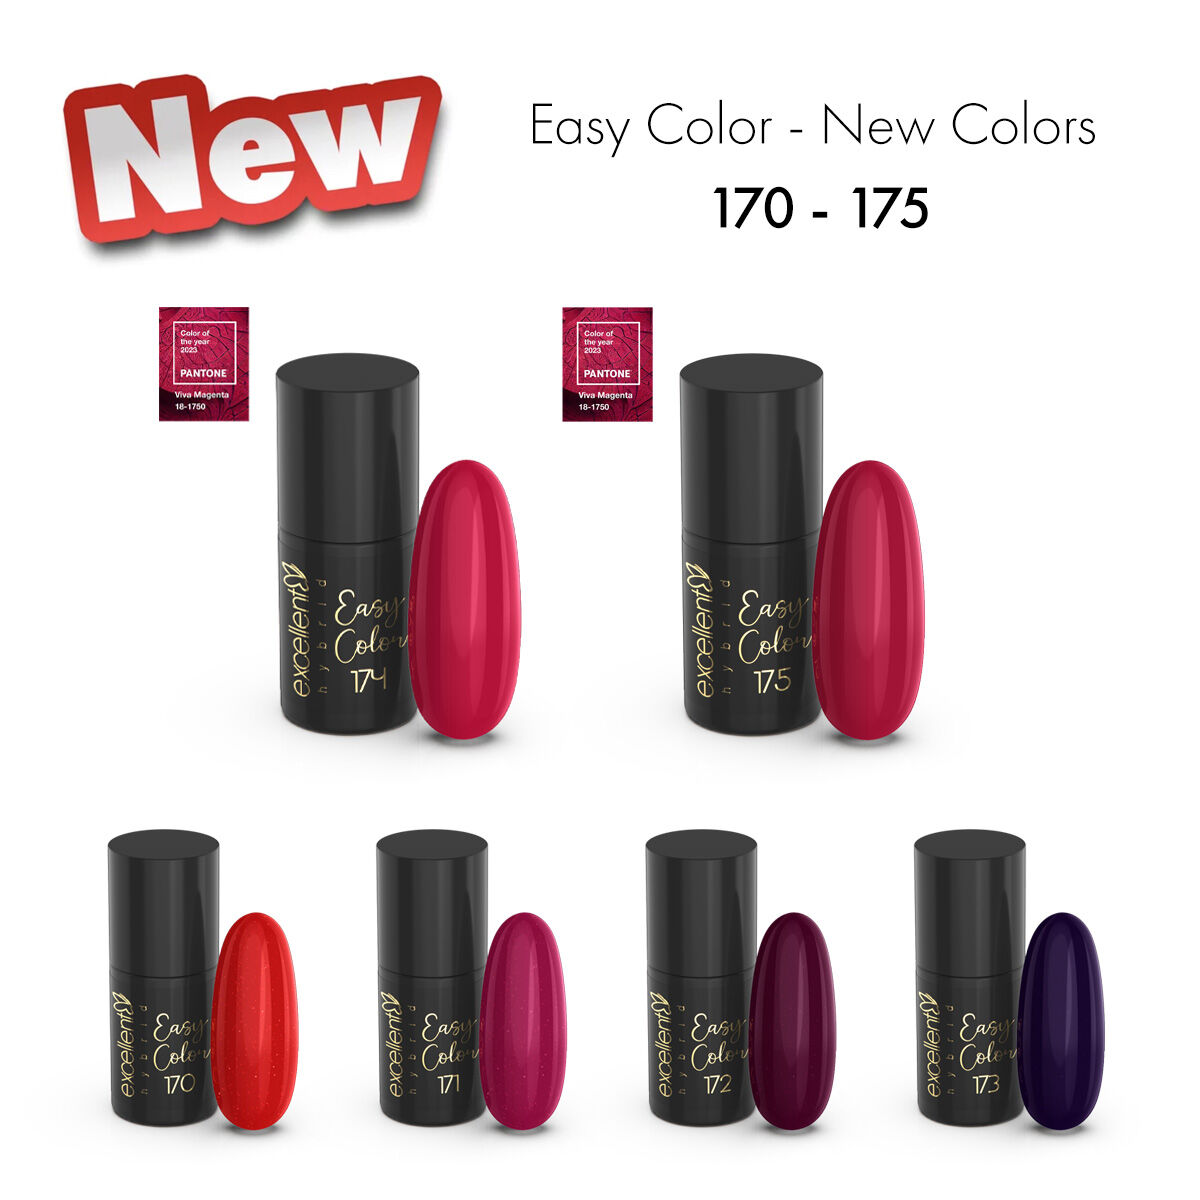 Nowe kolory Easy Color 170-175